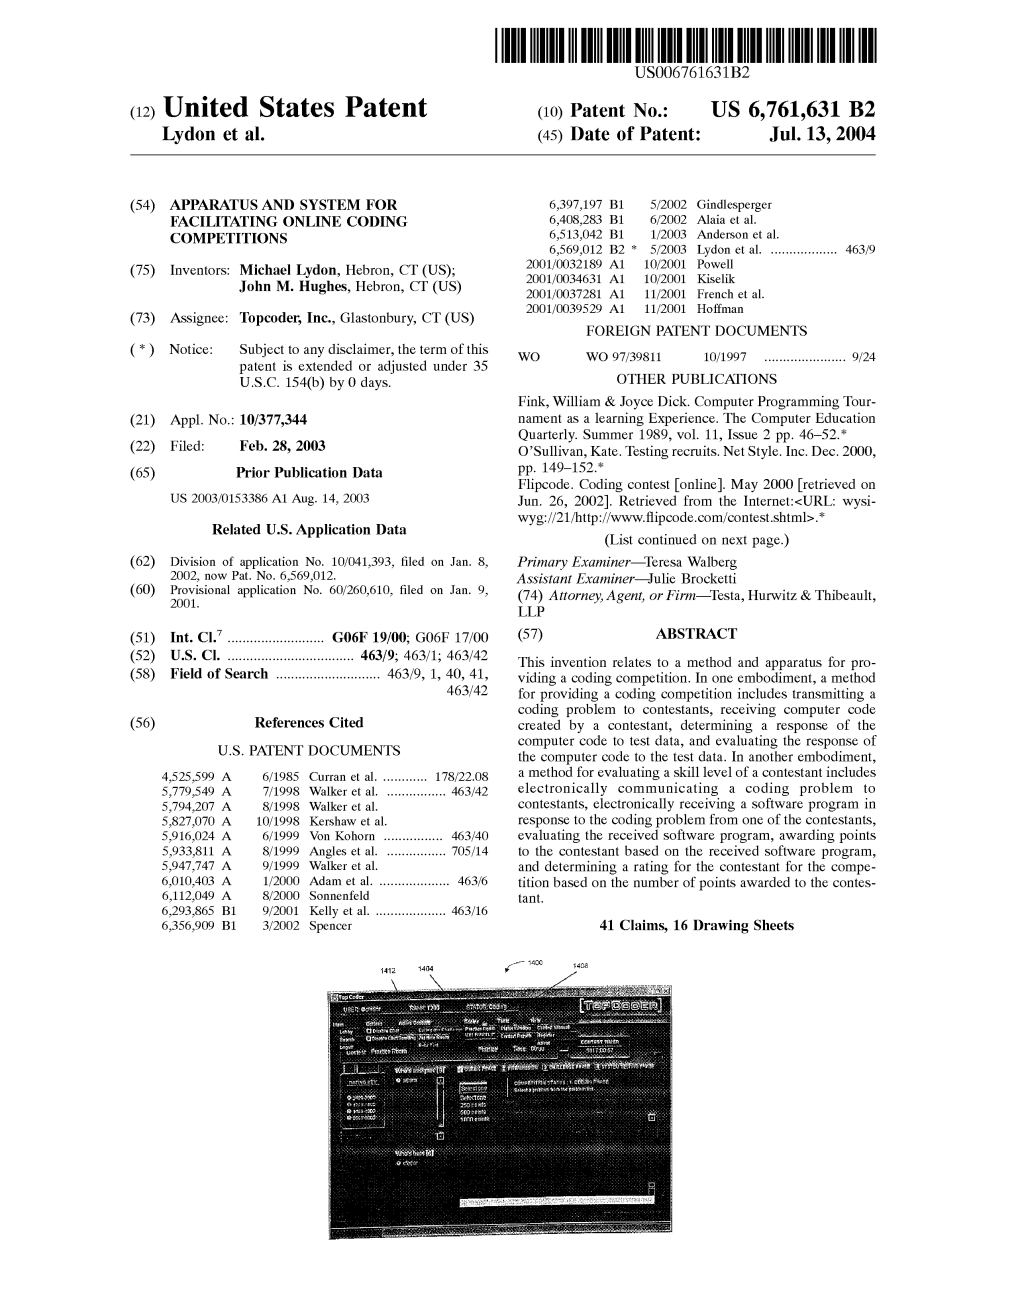 United States Patent (10) Patent N0.: US 6,761,631 B2 Lydon Et Al